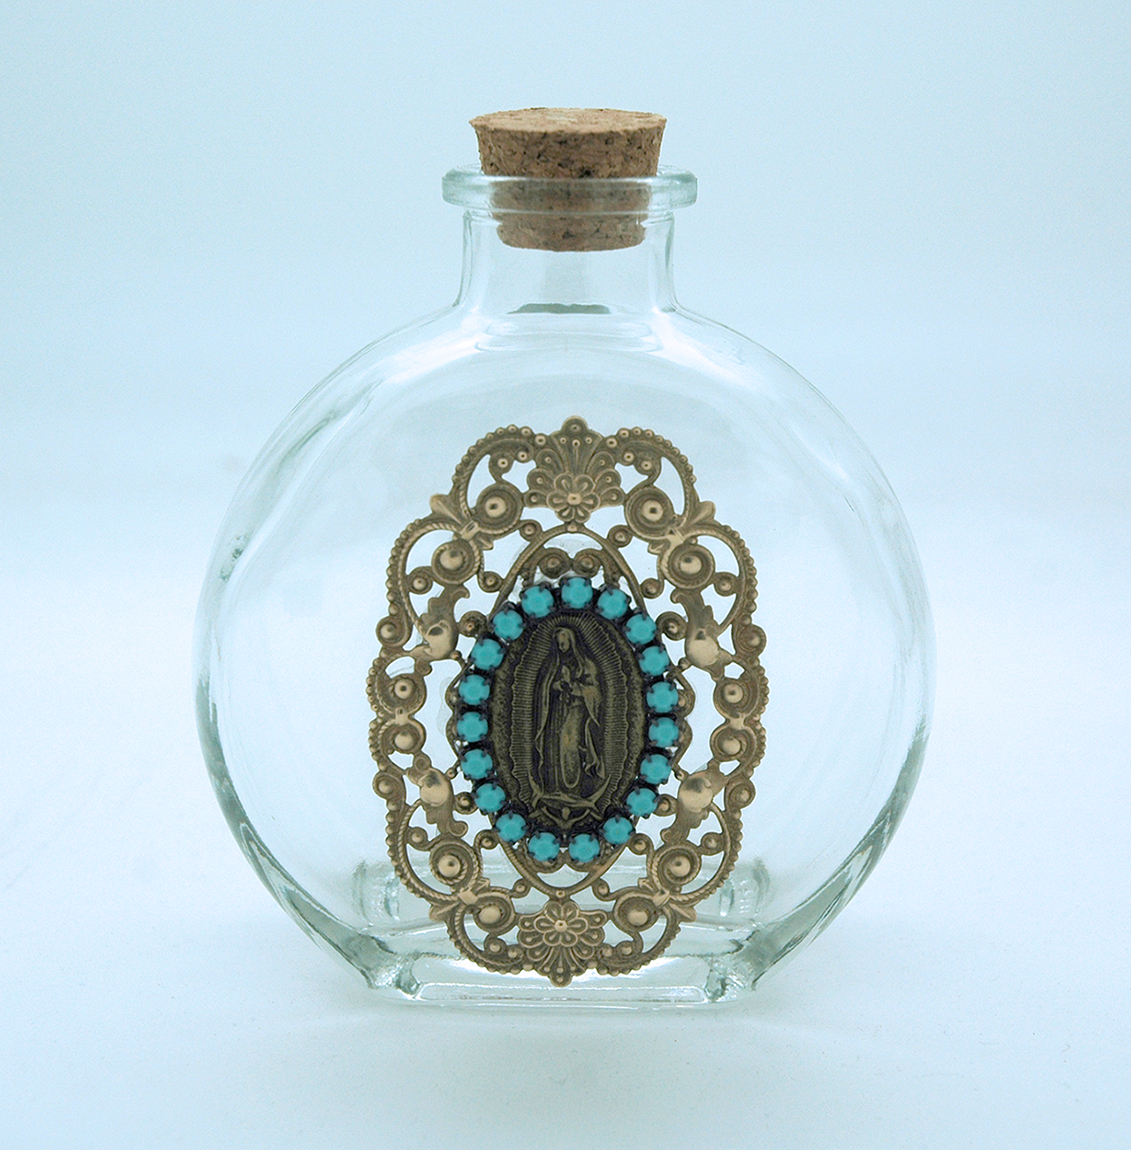 VHWB21 - Vintage Style Holy Water Bottle, Guadalupe Medal, Turquoise Swarovski Crystals